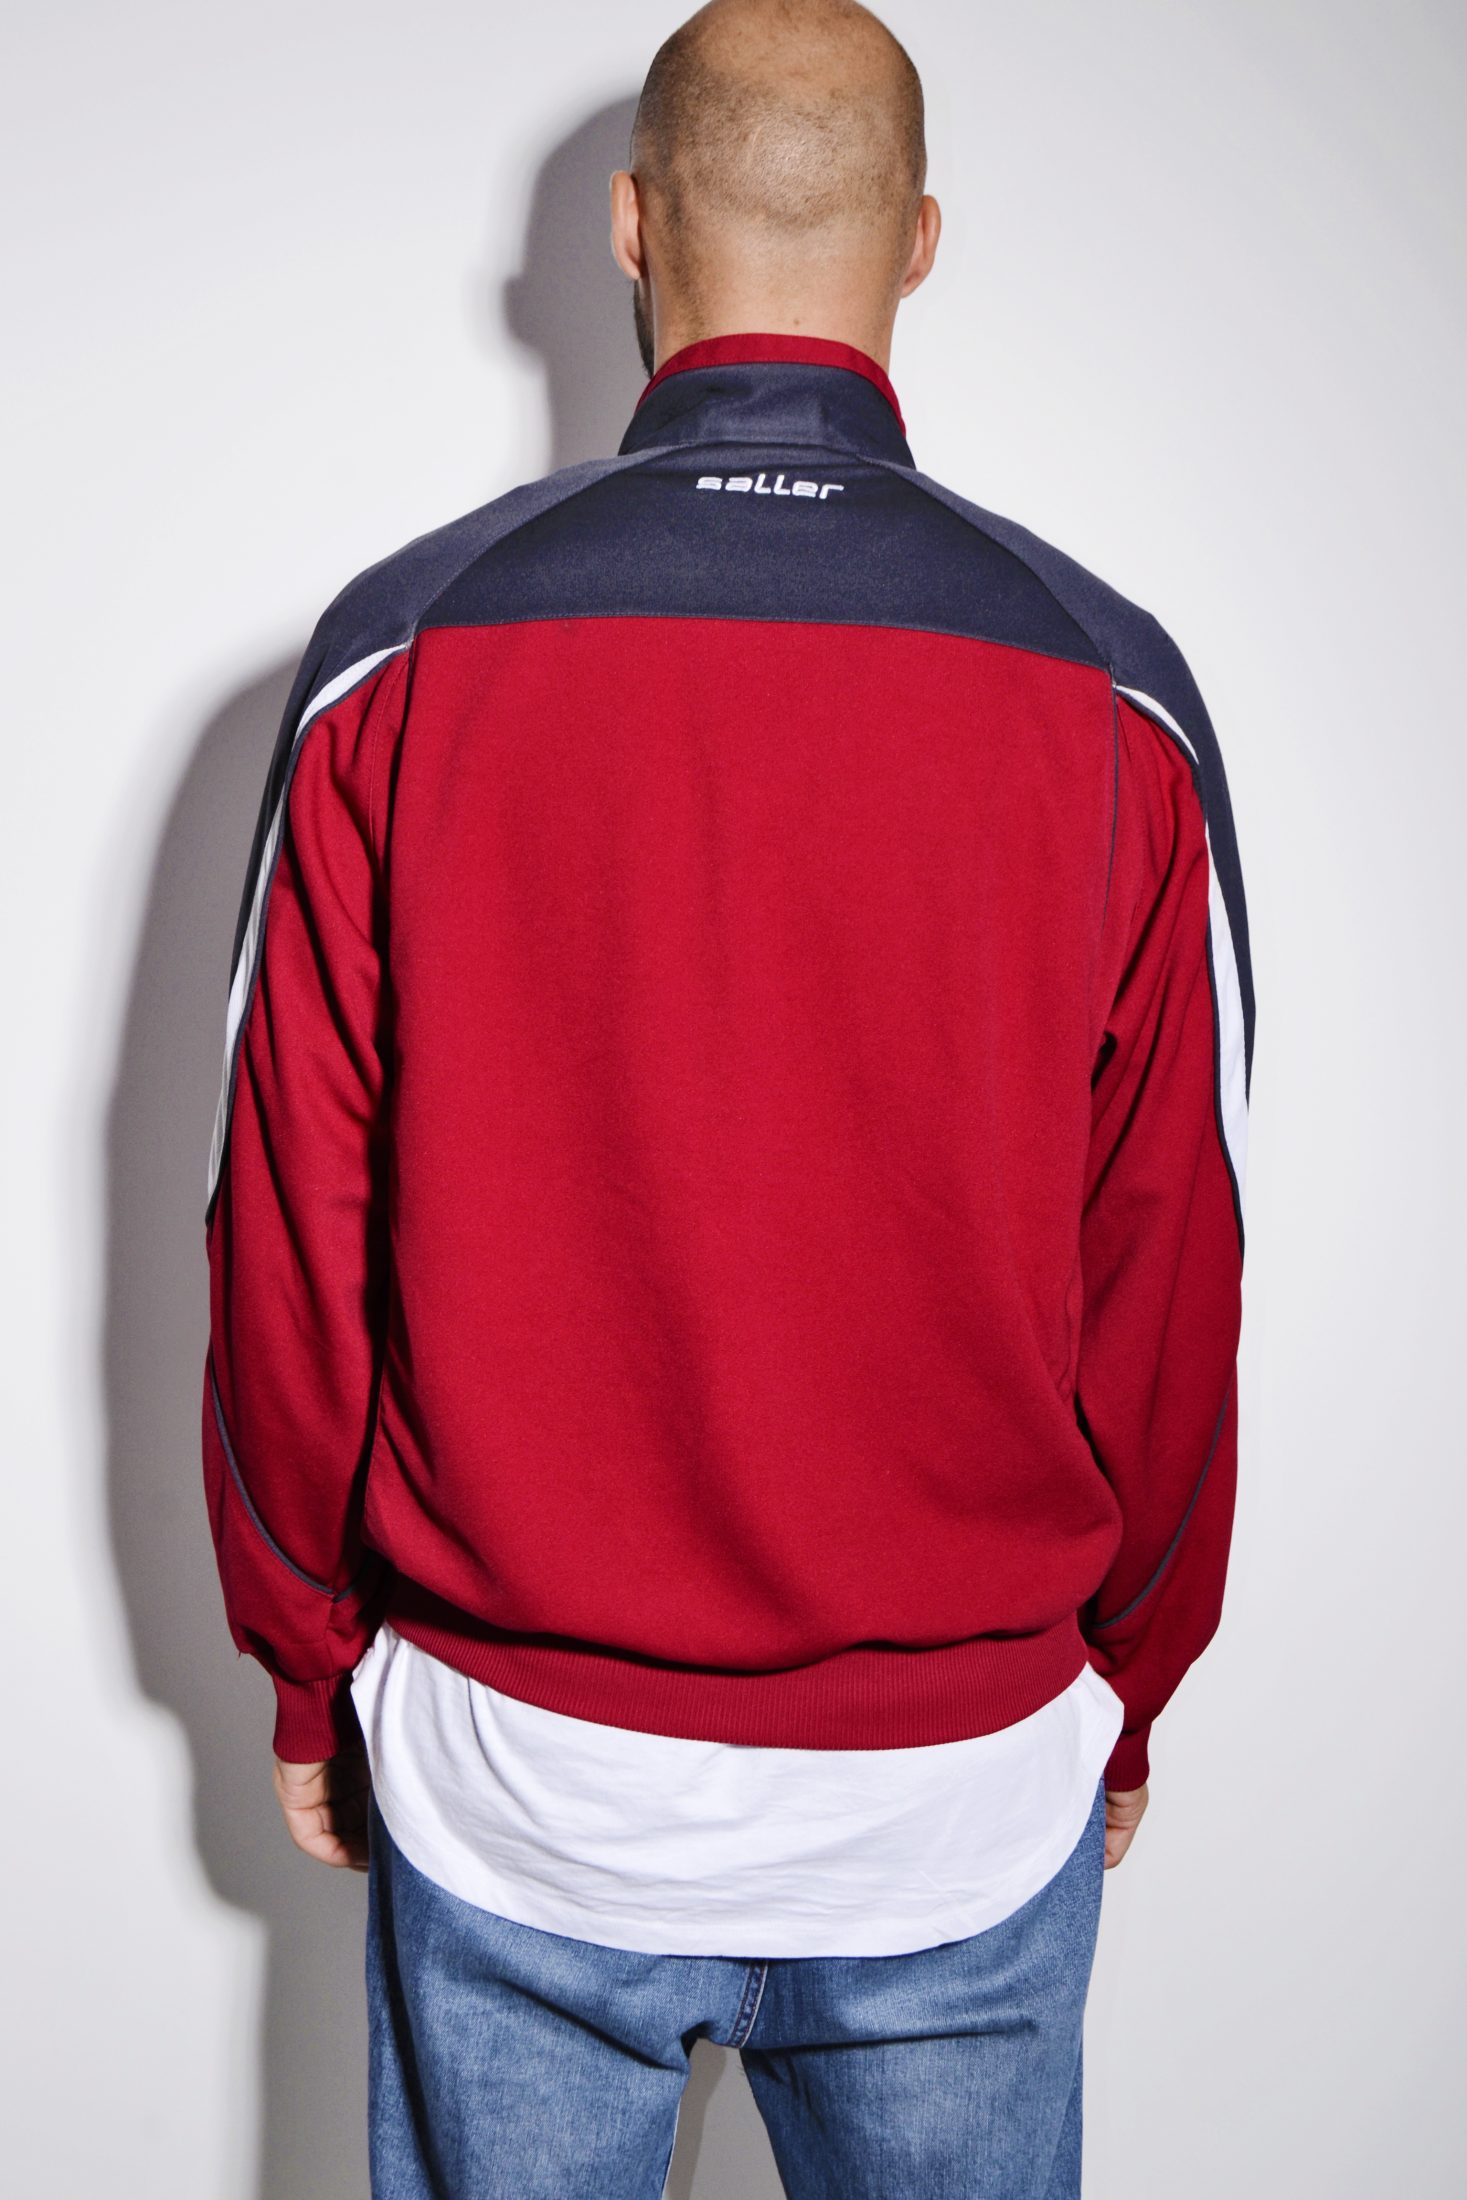 Vintage red tracksuit top jacket | HOT MILK vintage clothing online store